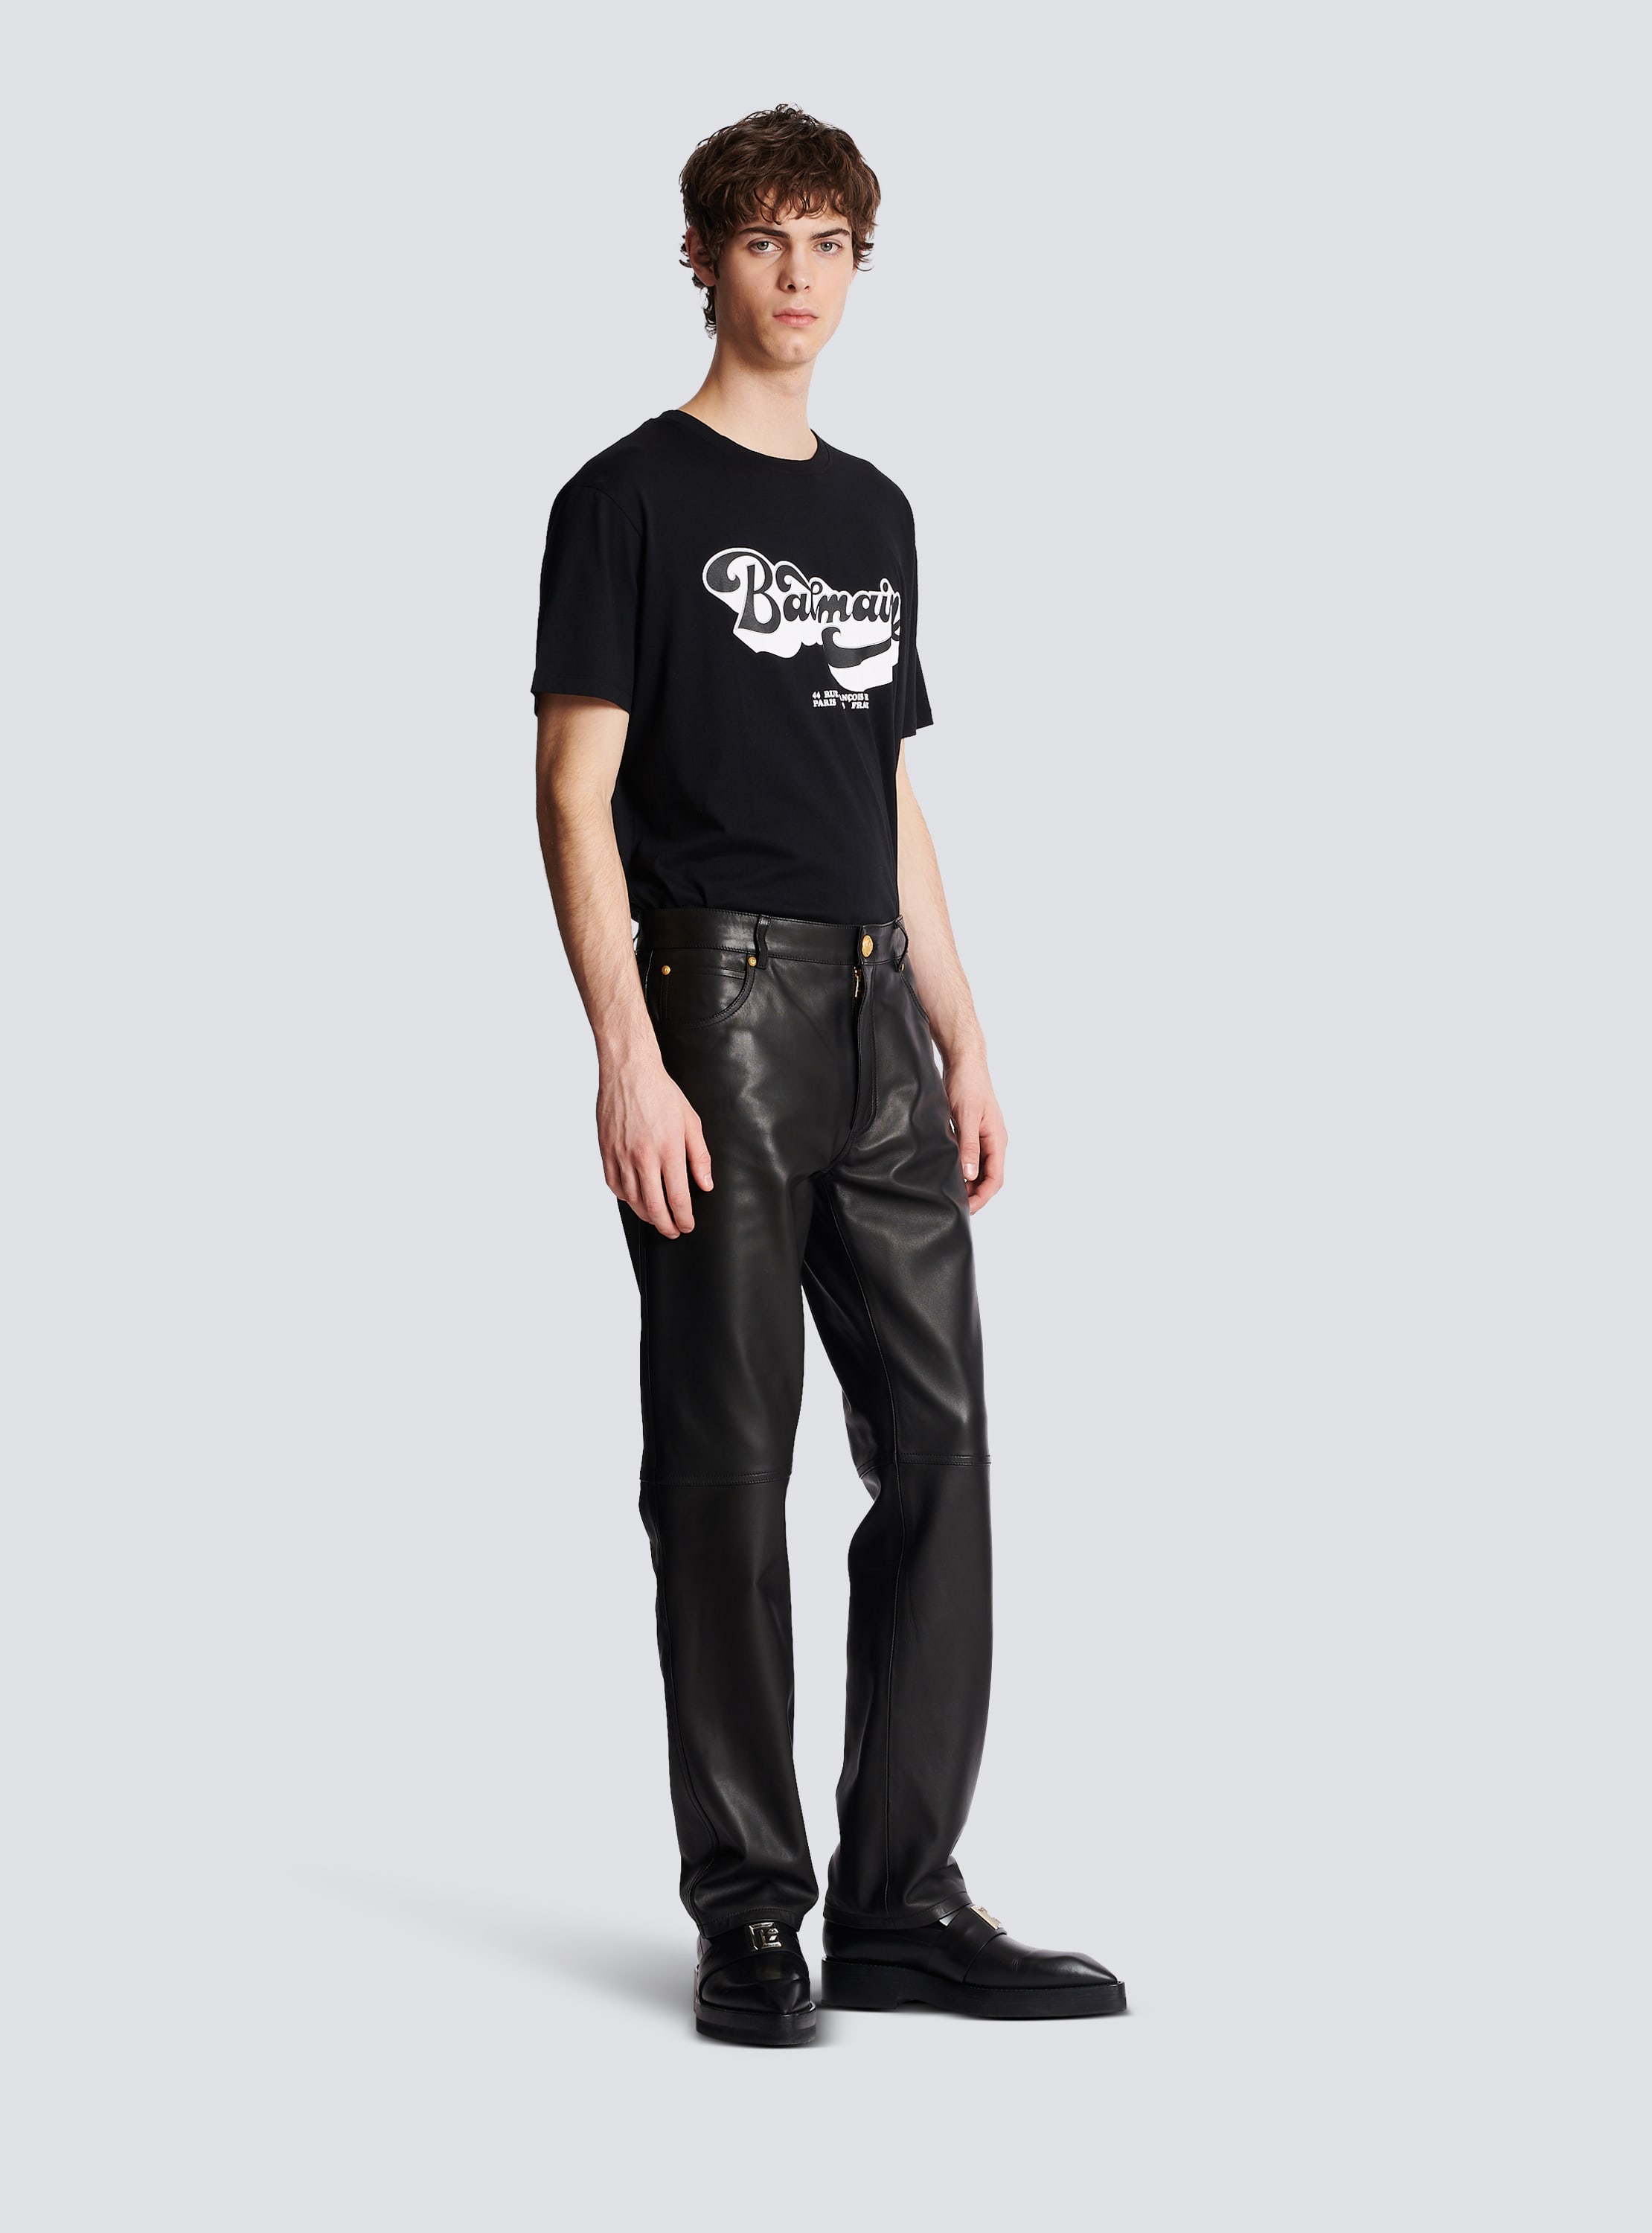 Balmain Leather trousers, Men's Clothing